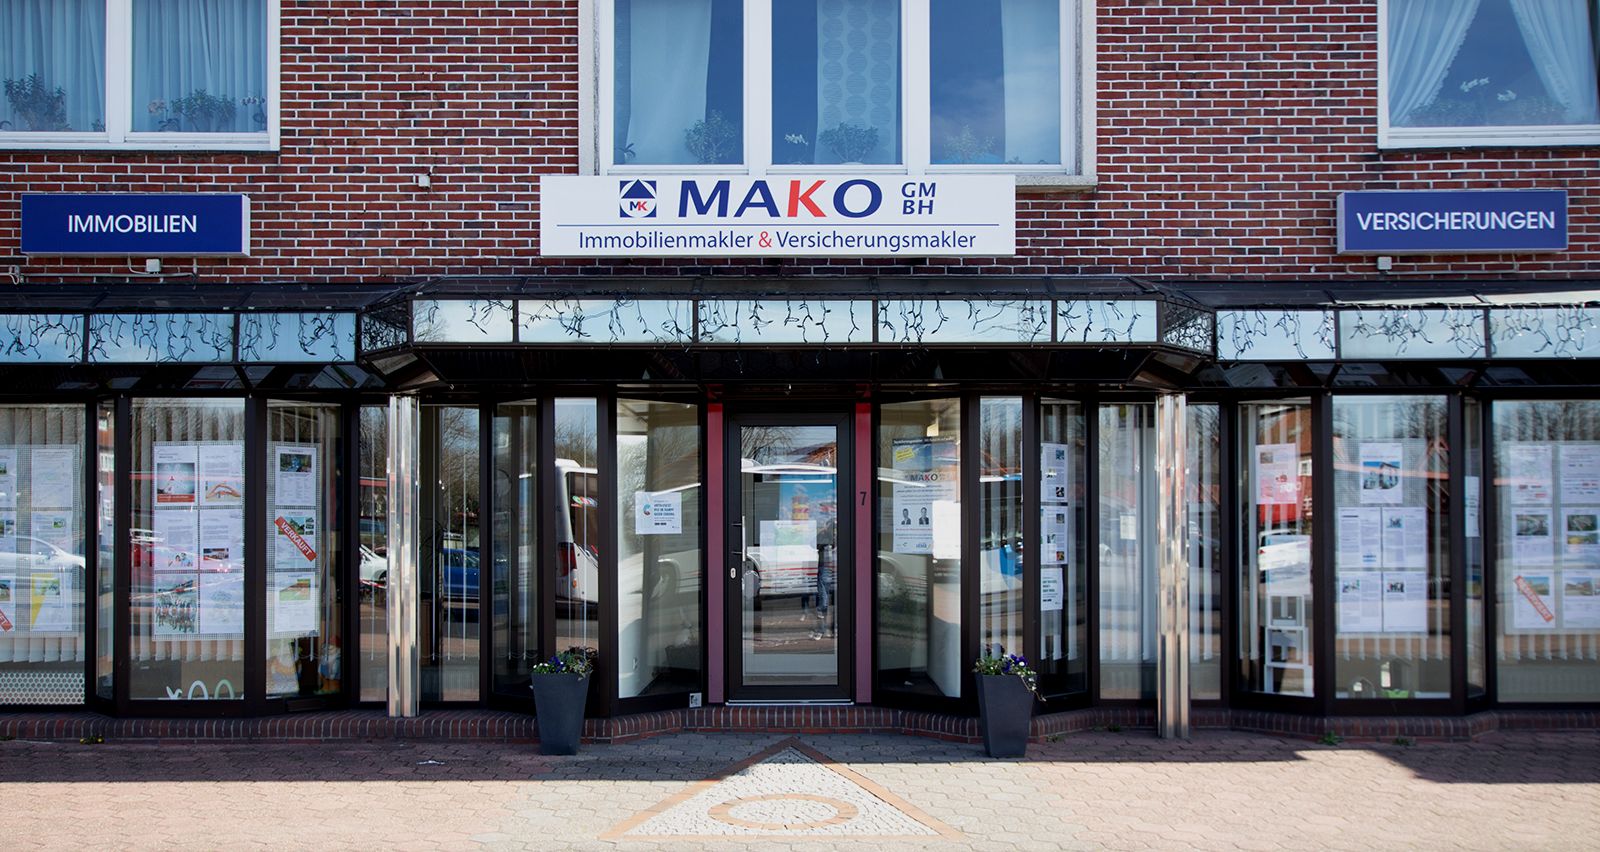 MAKO GmbH